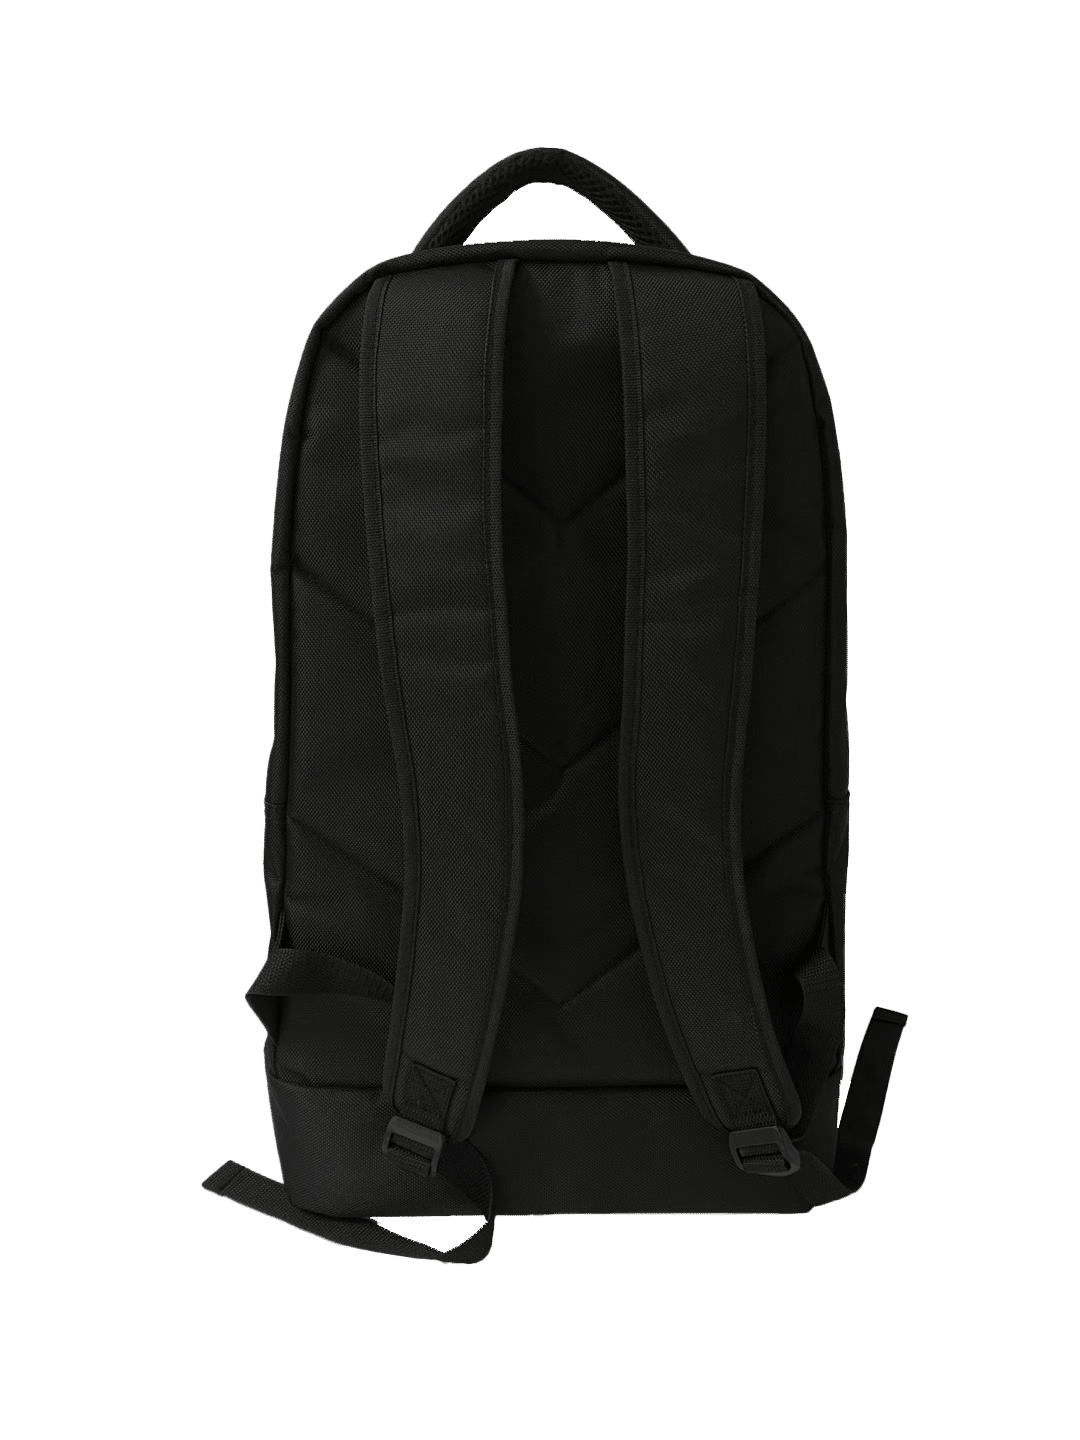 Academy Backpack - Black | Veto Sports